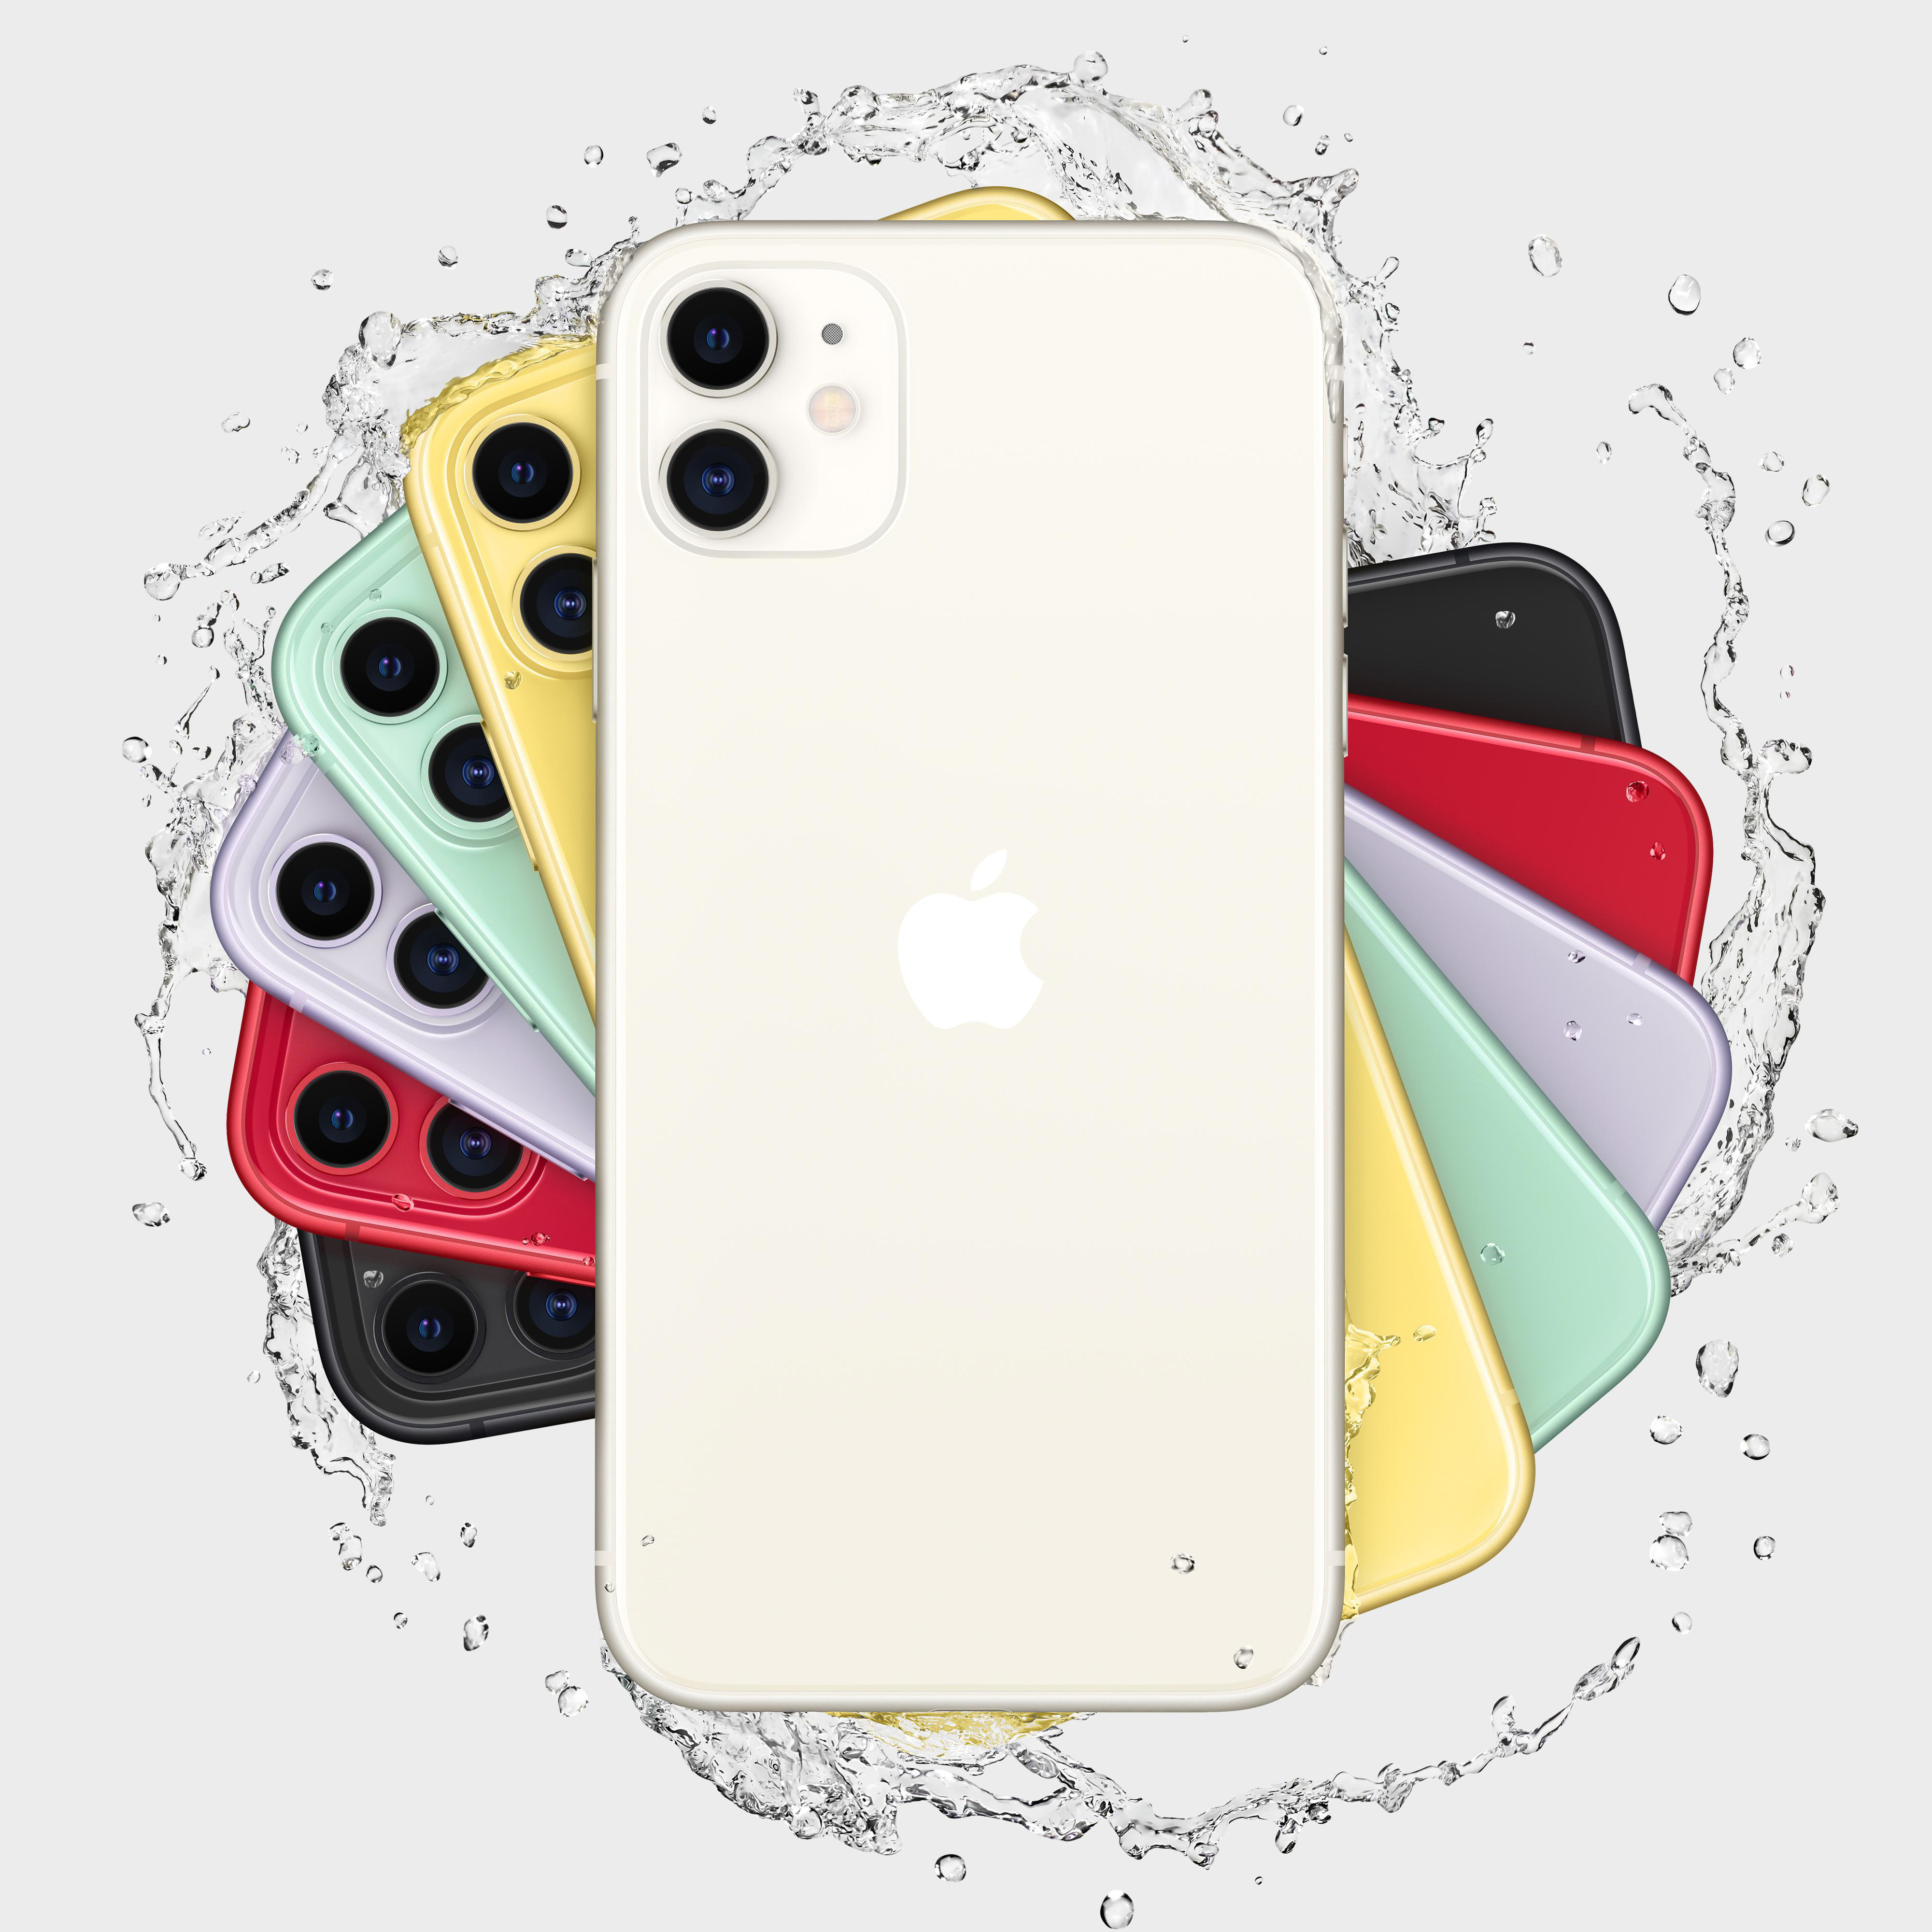 APPLE iPhone 11 64 Dual SIM White GB